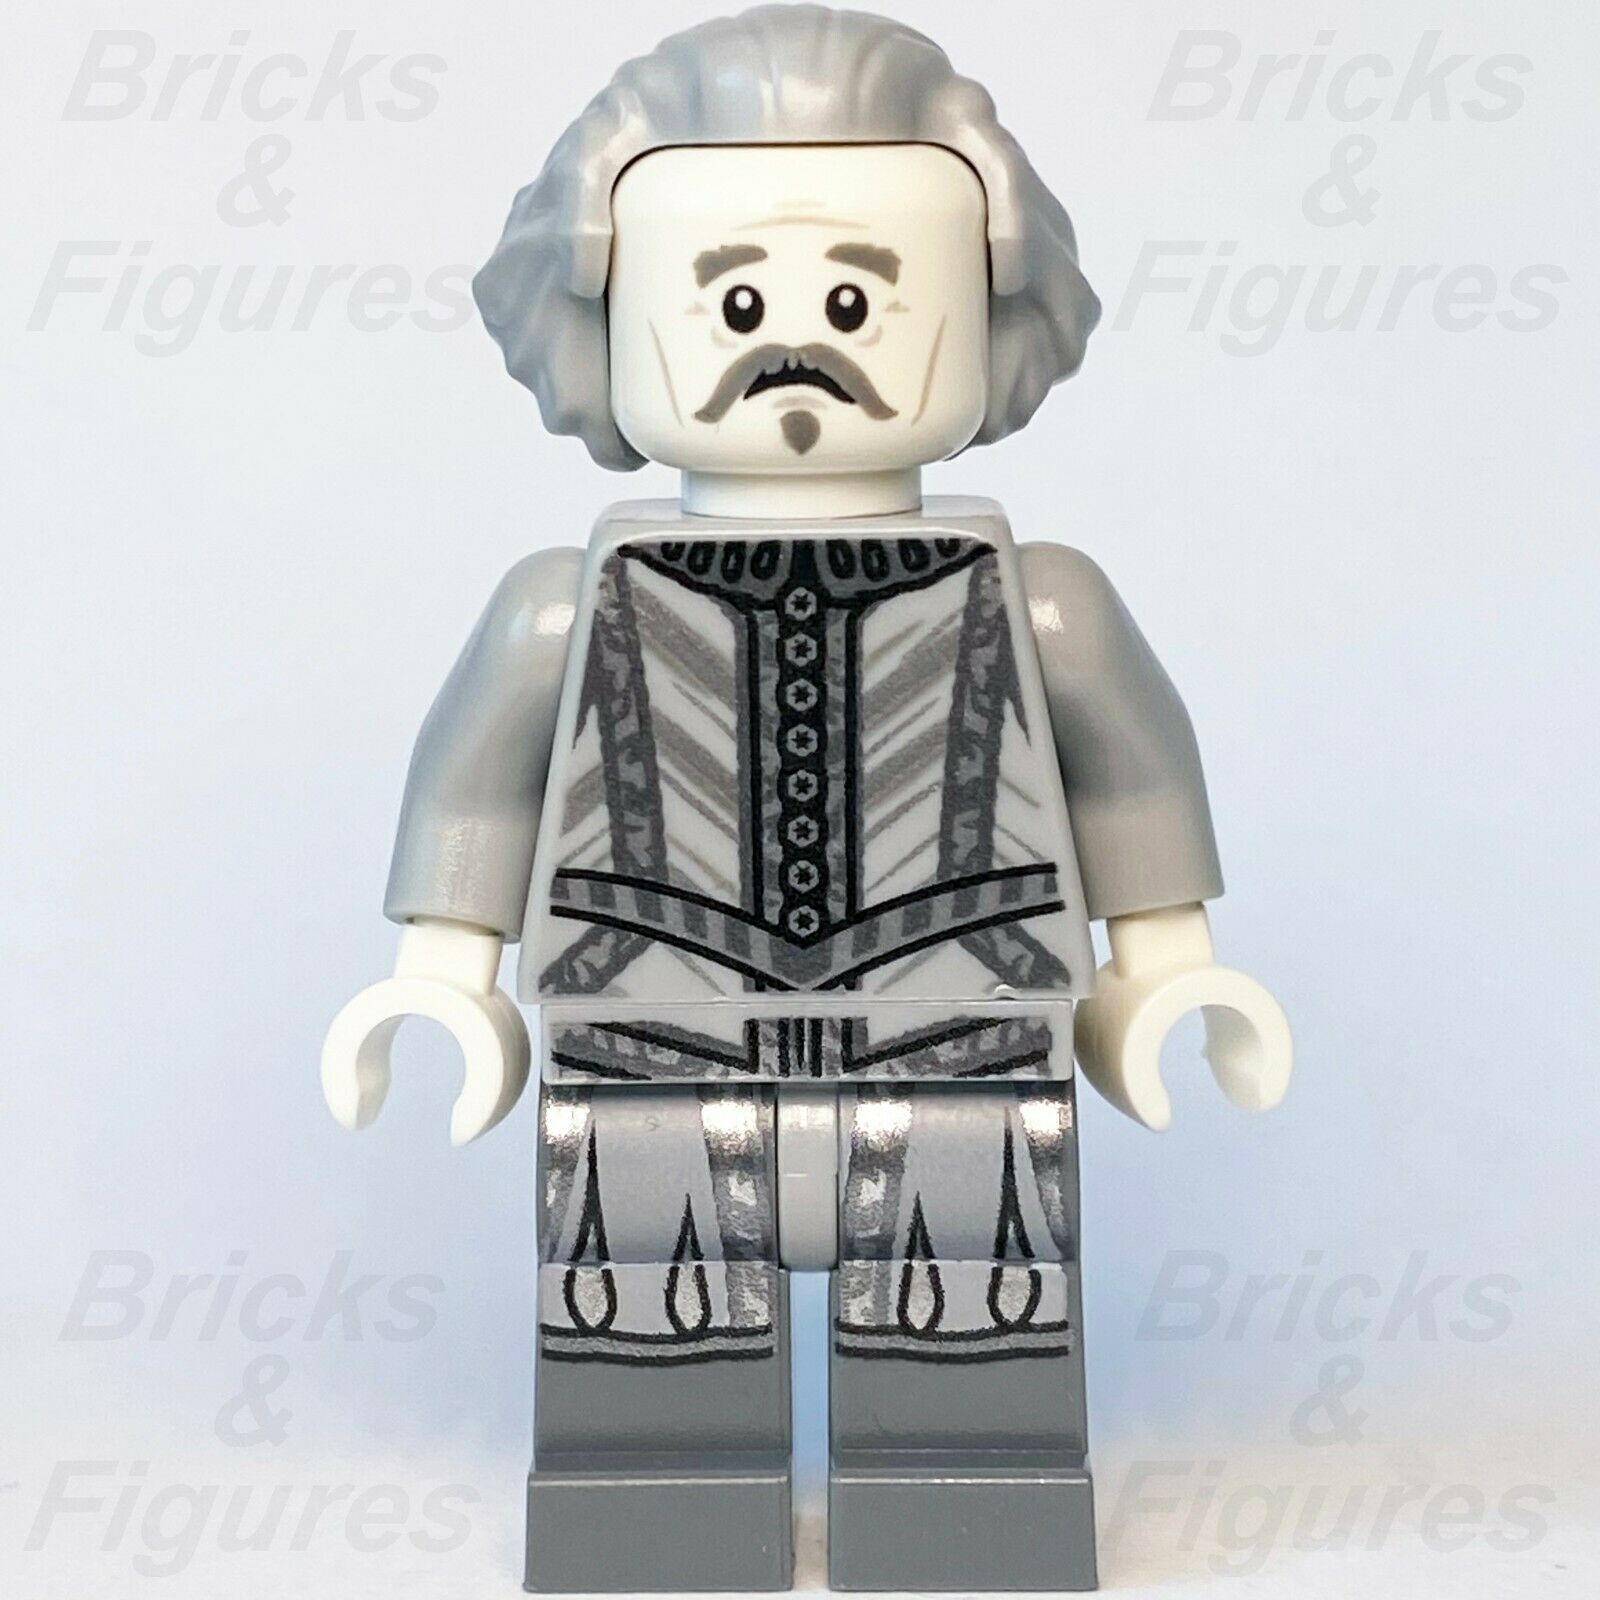 LEGO Harry Potter Minifigure - ghost Nearly Headless Nick - Extra